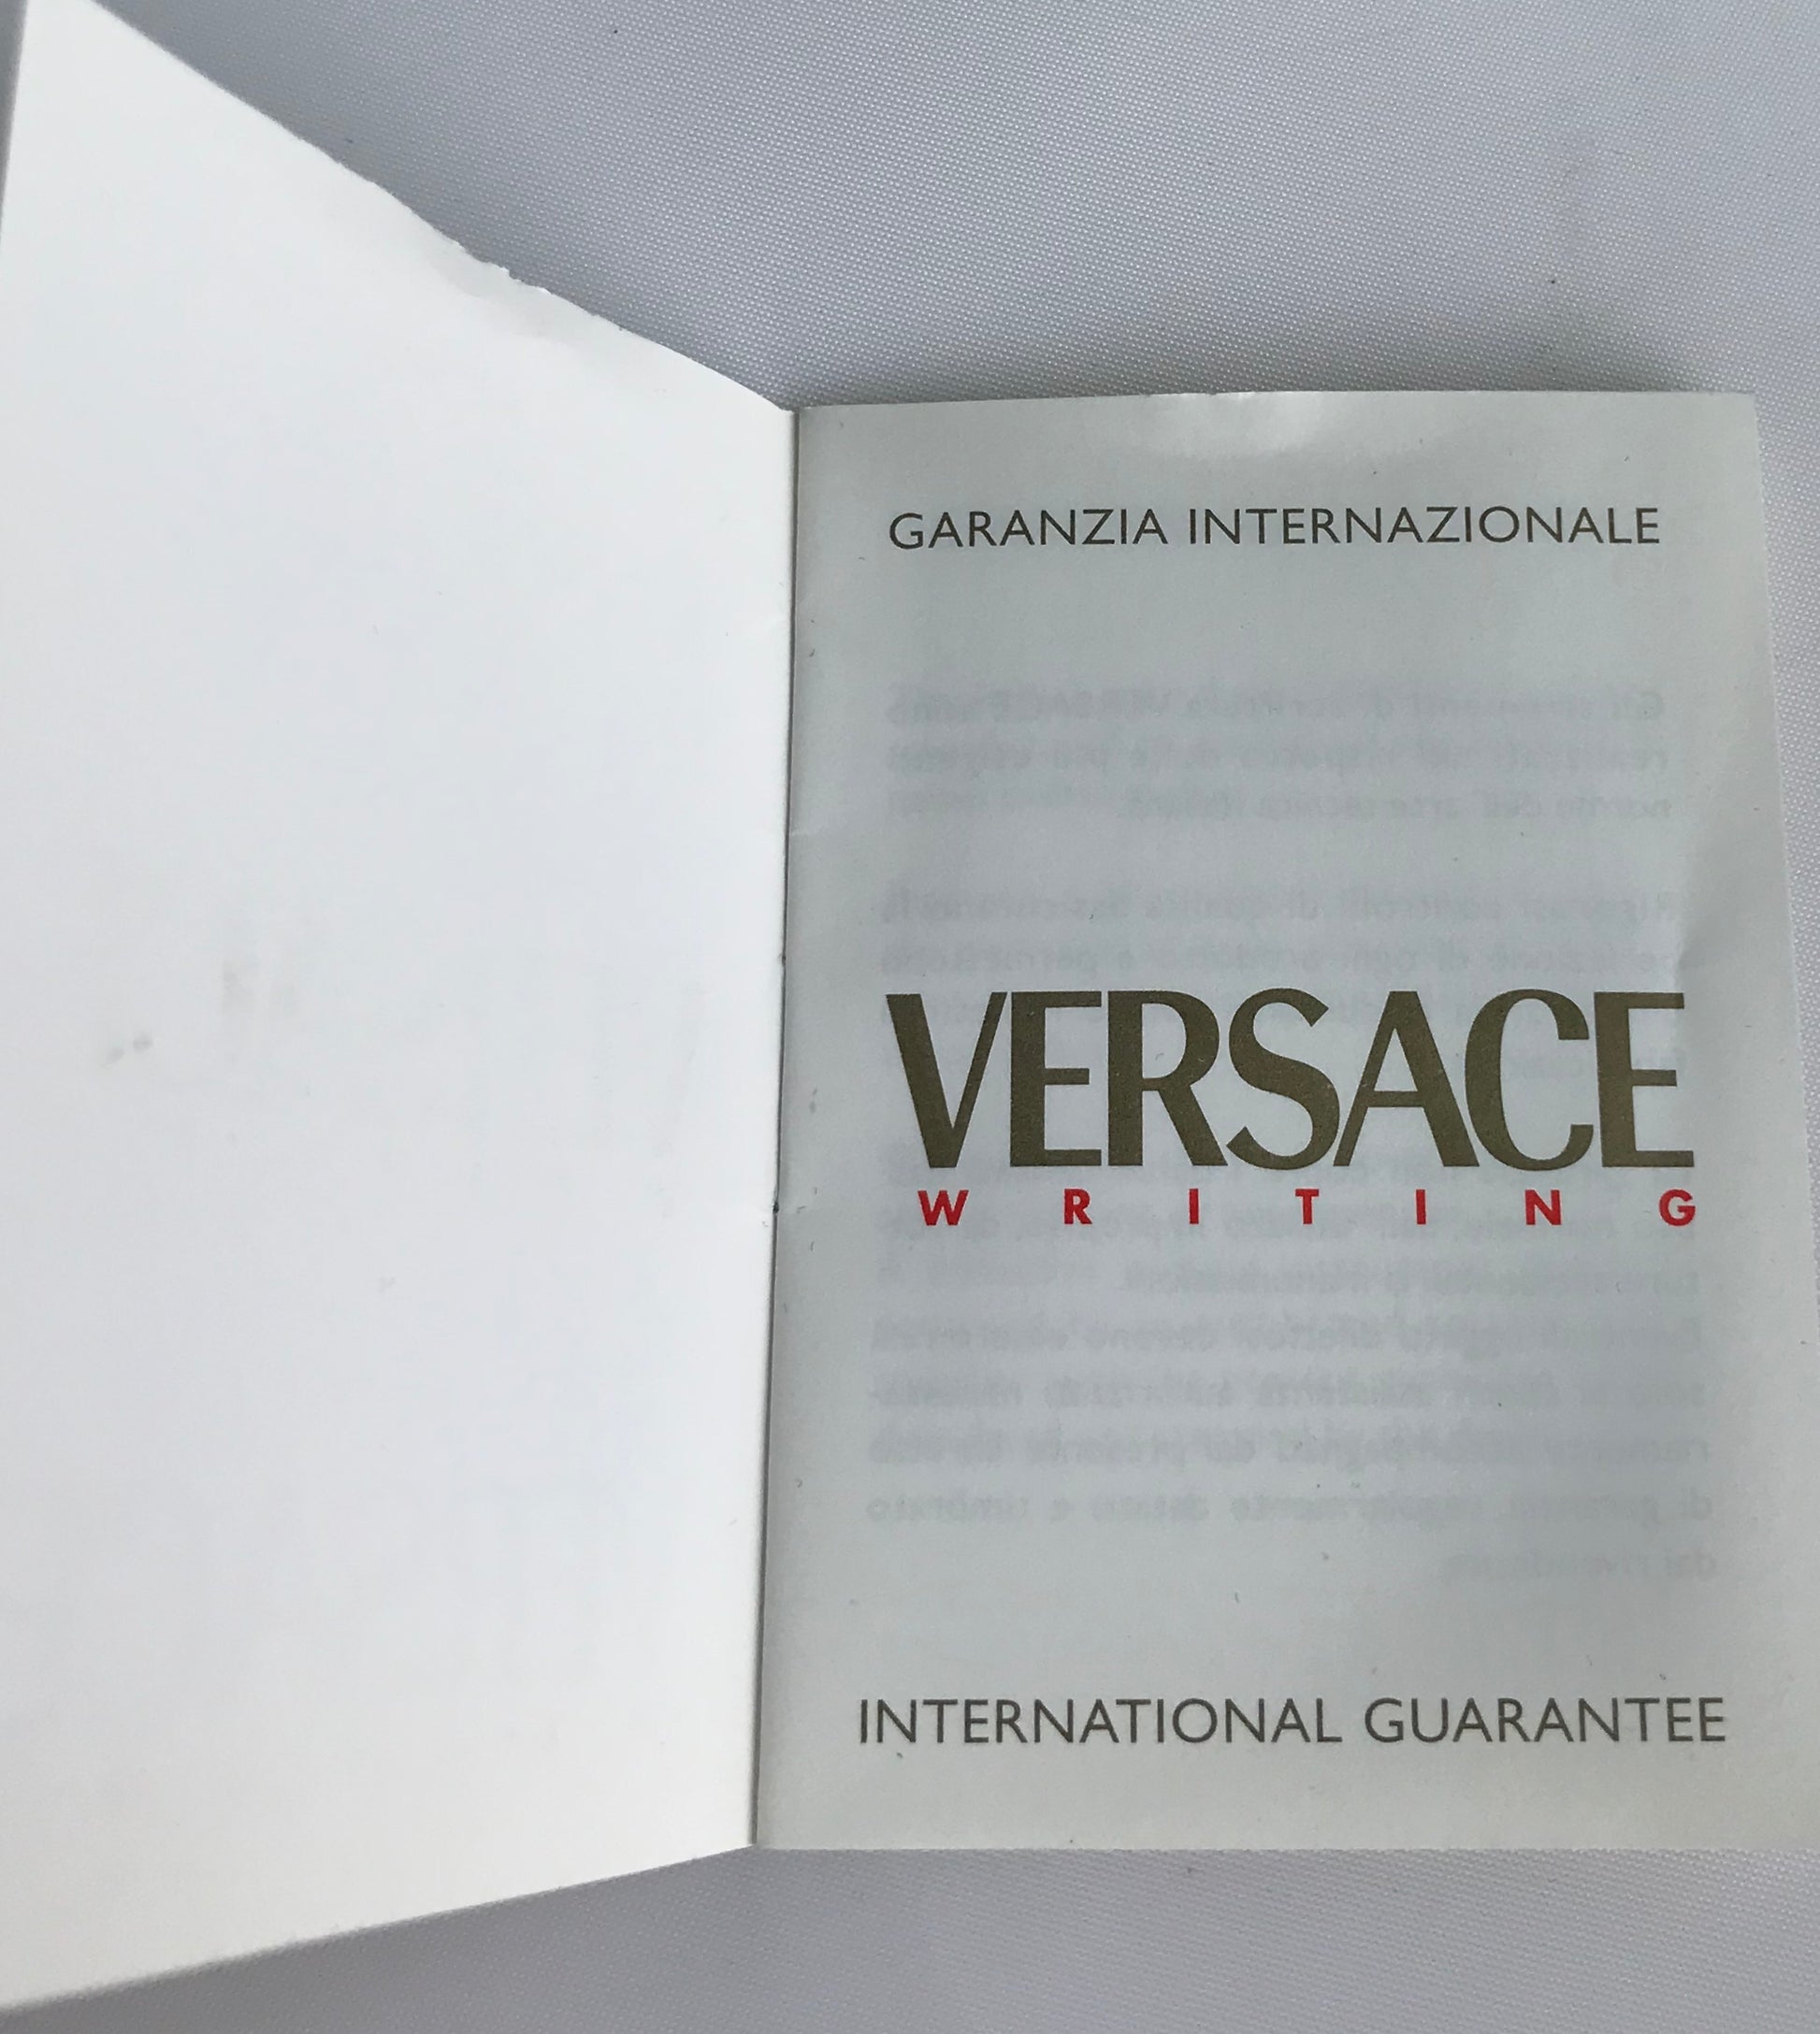 Gianni Versace Mens “Signature Romance” Pen – Joseph Machini